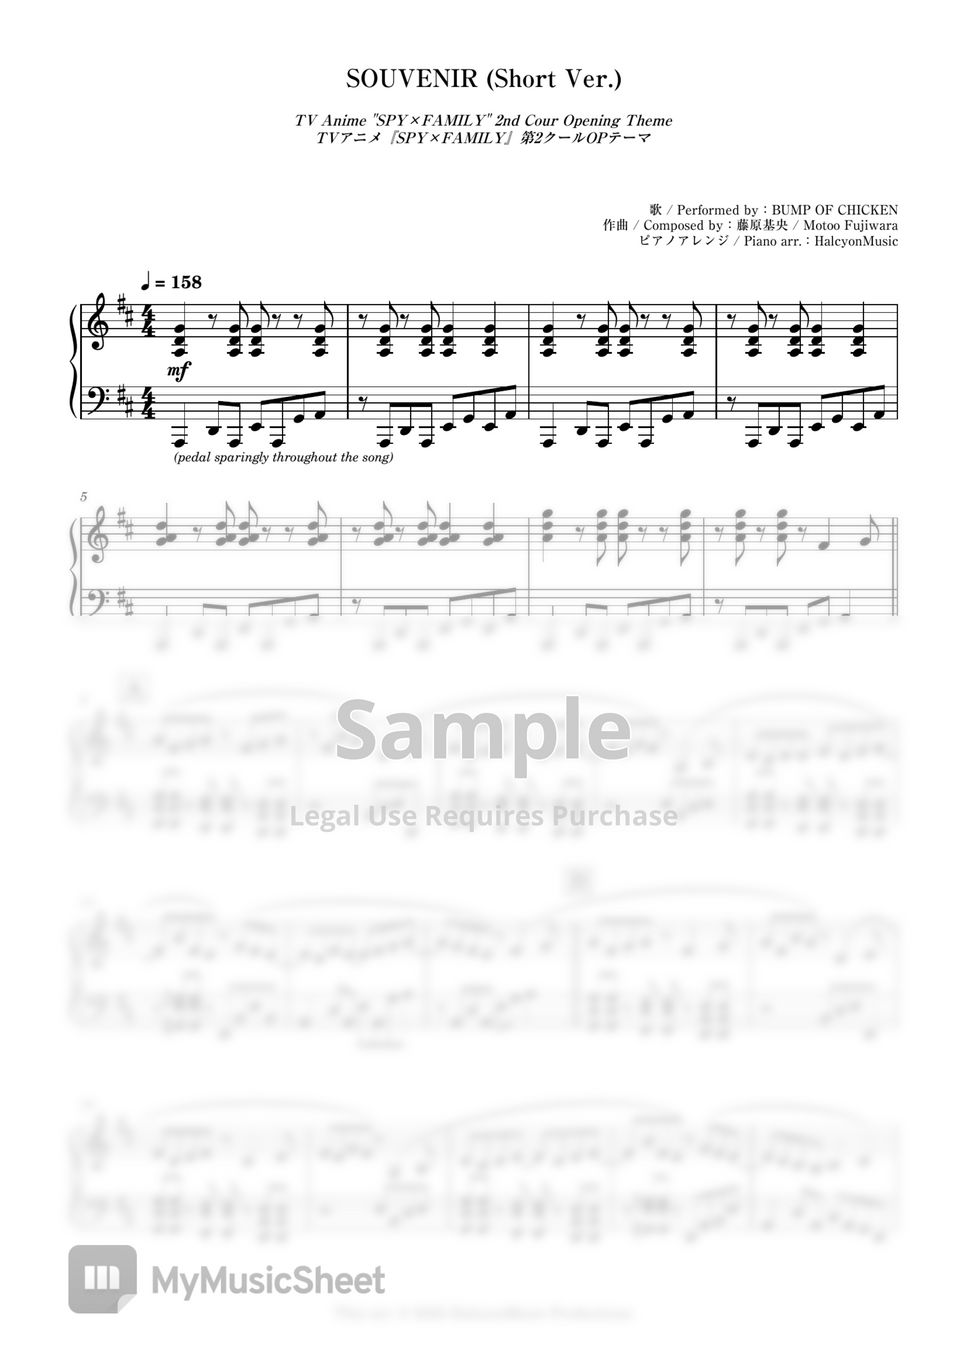 BUMP OF CHICKEN - SOUVENIR (SPY x FAMILY OP2 - Short ver.) by HalcyonMusic